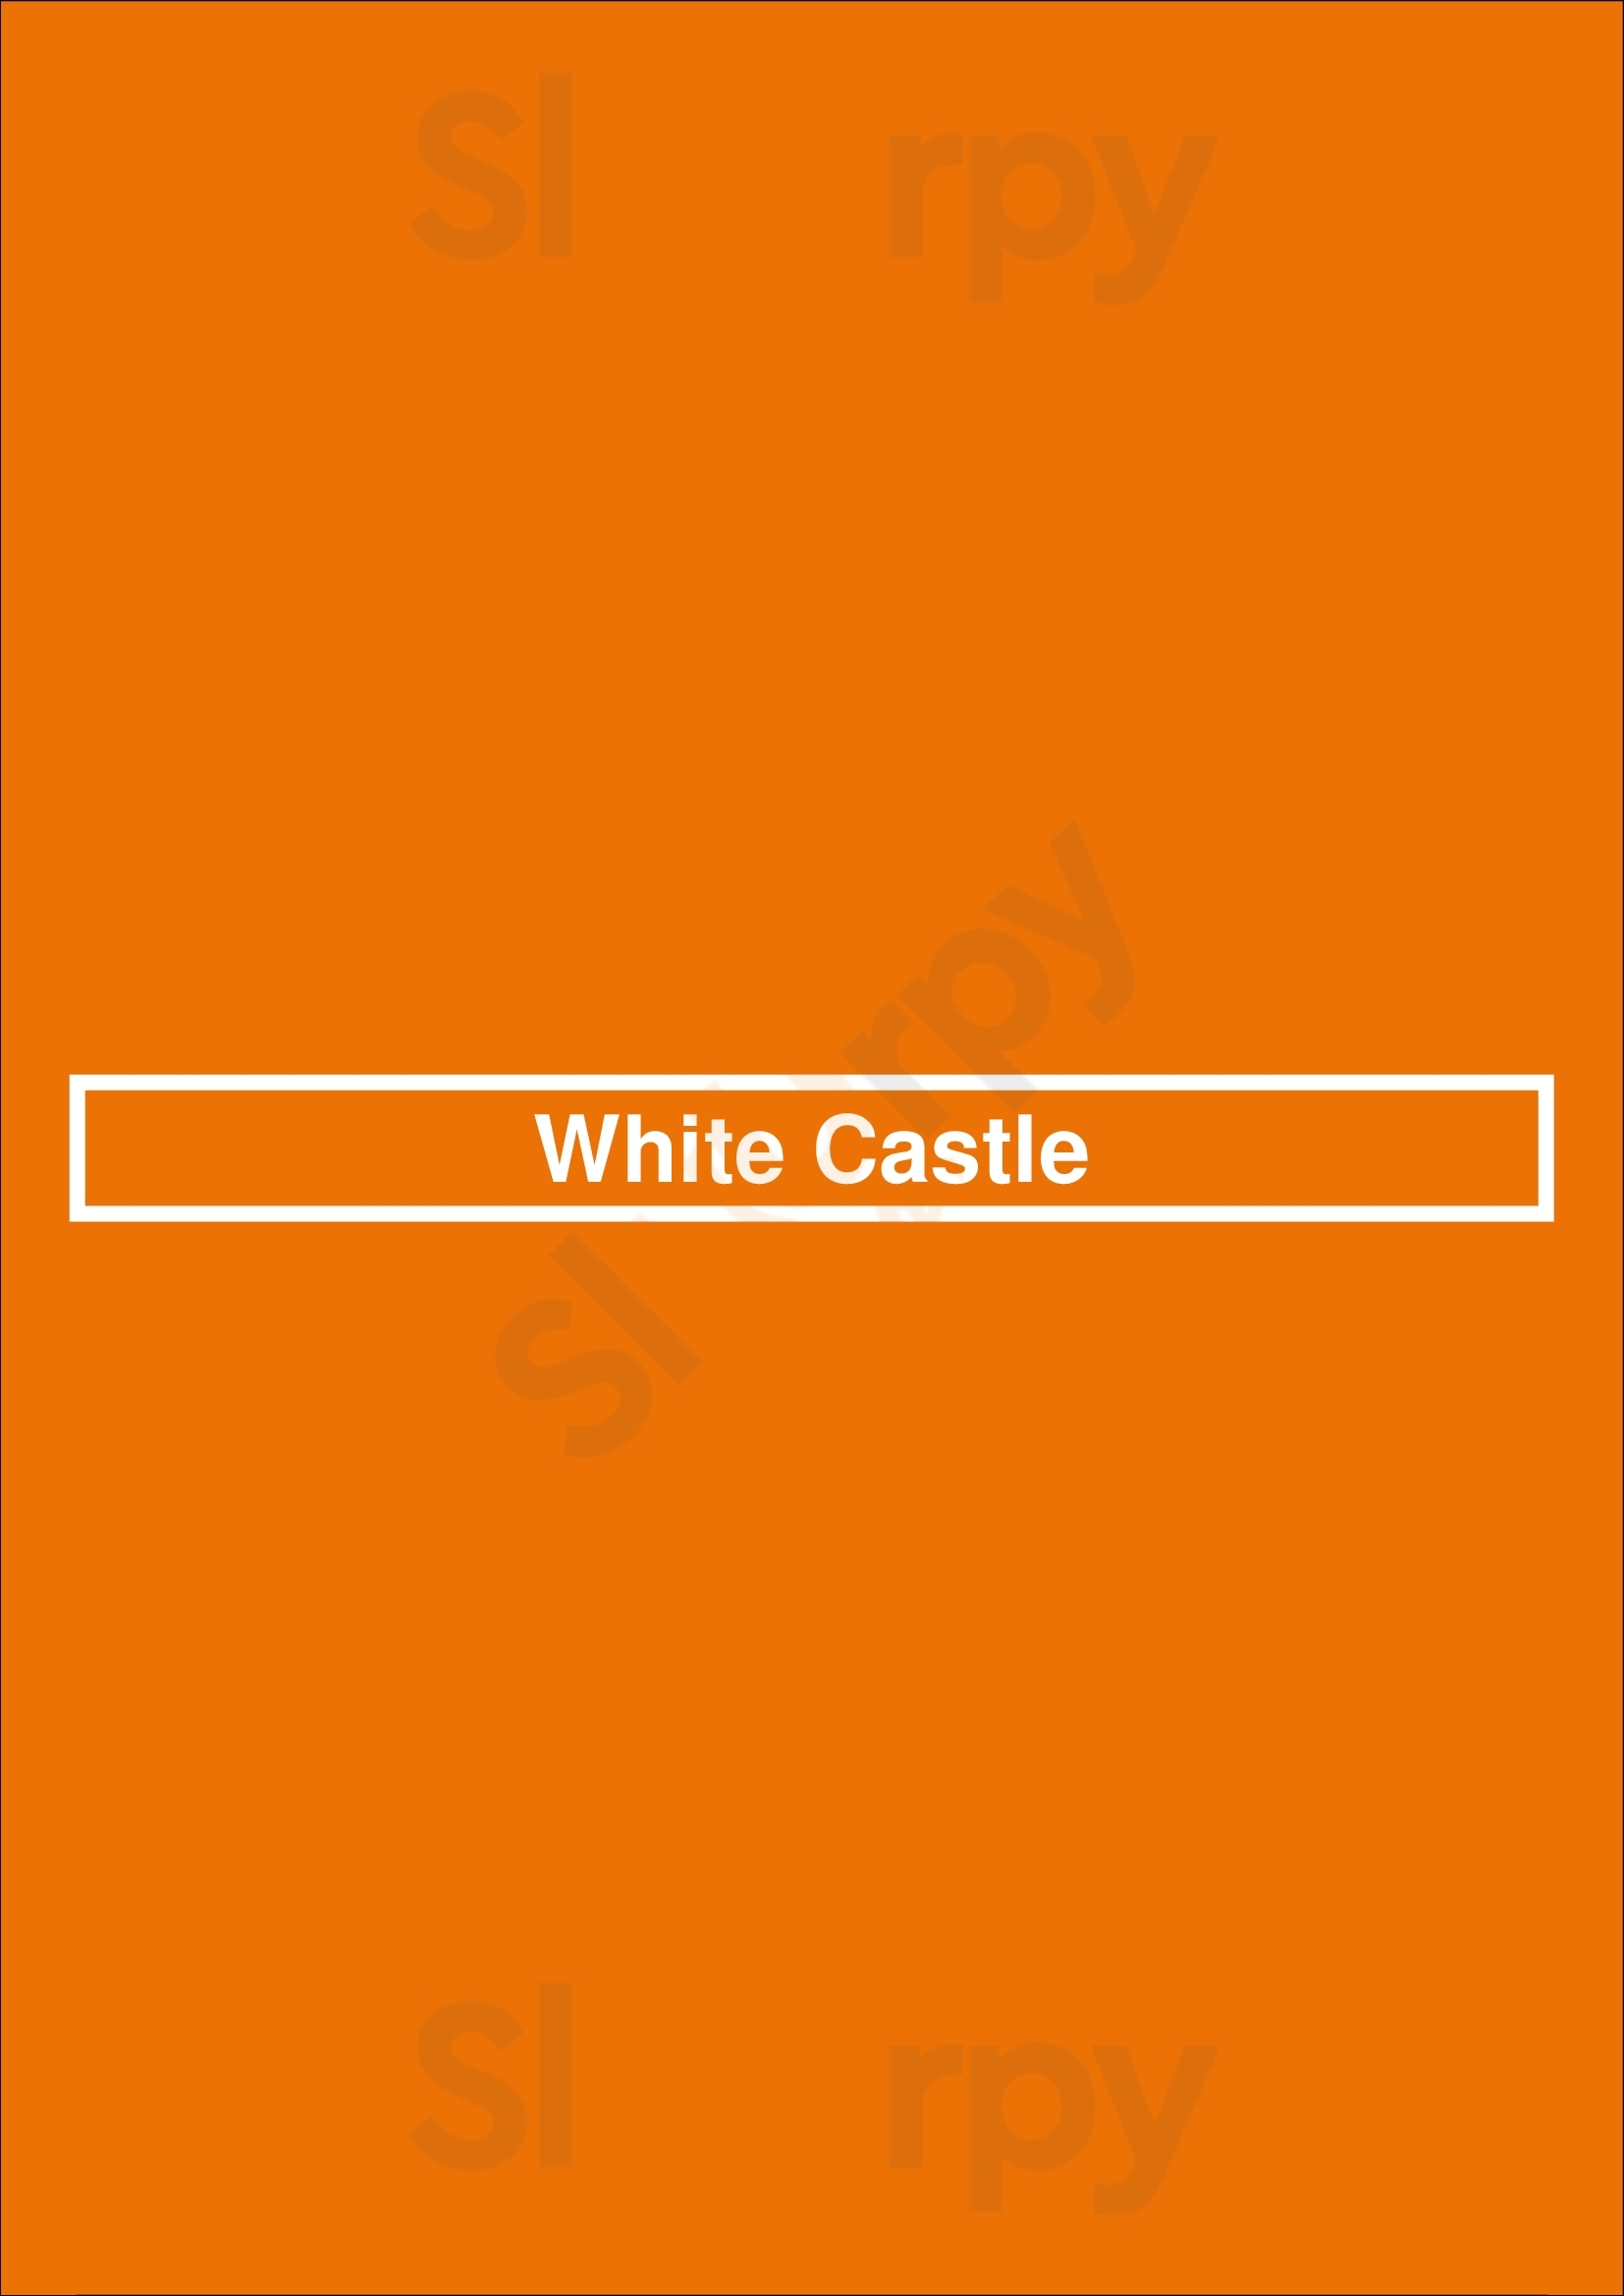 White Castle Indianapolis Menu - 1